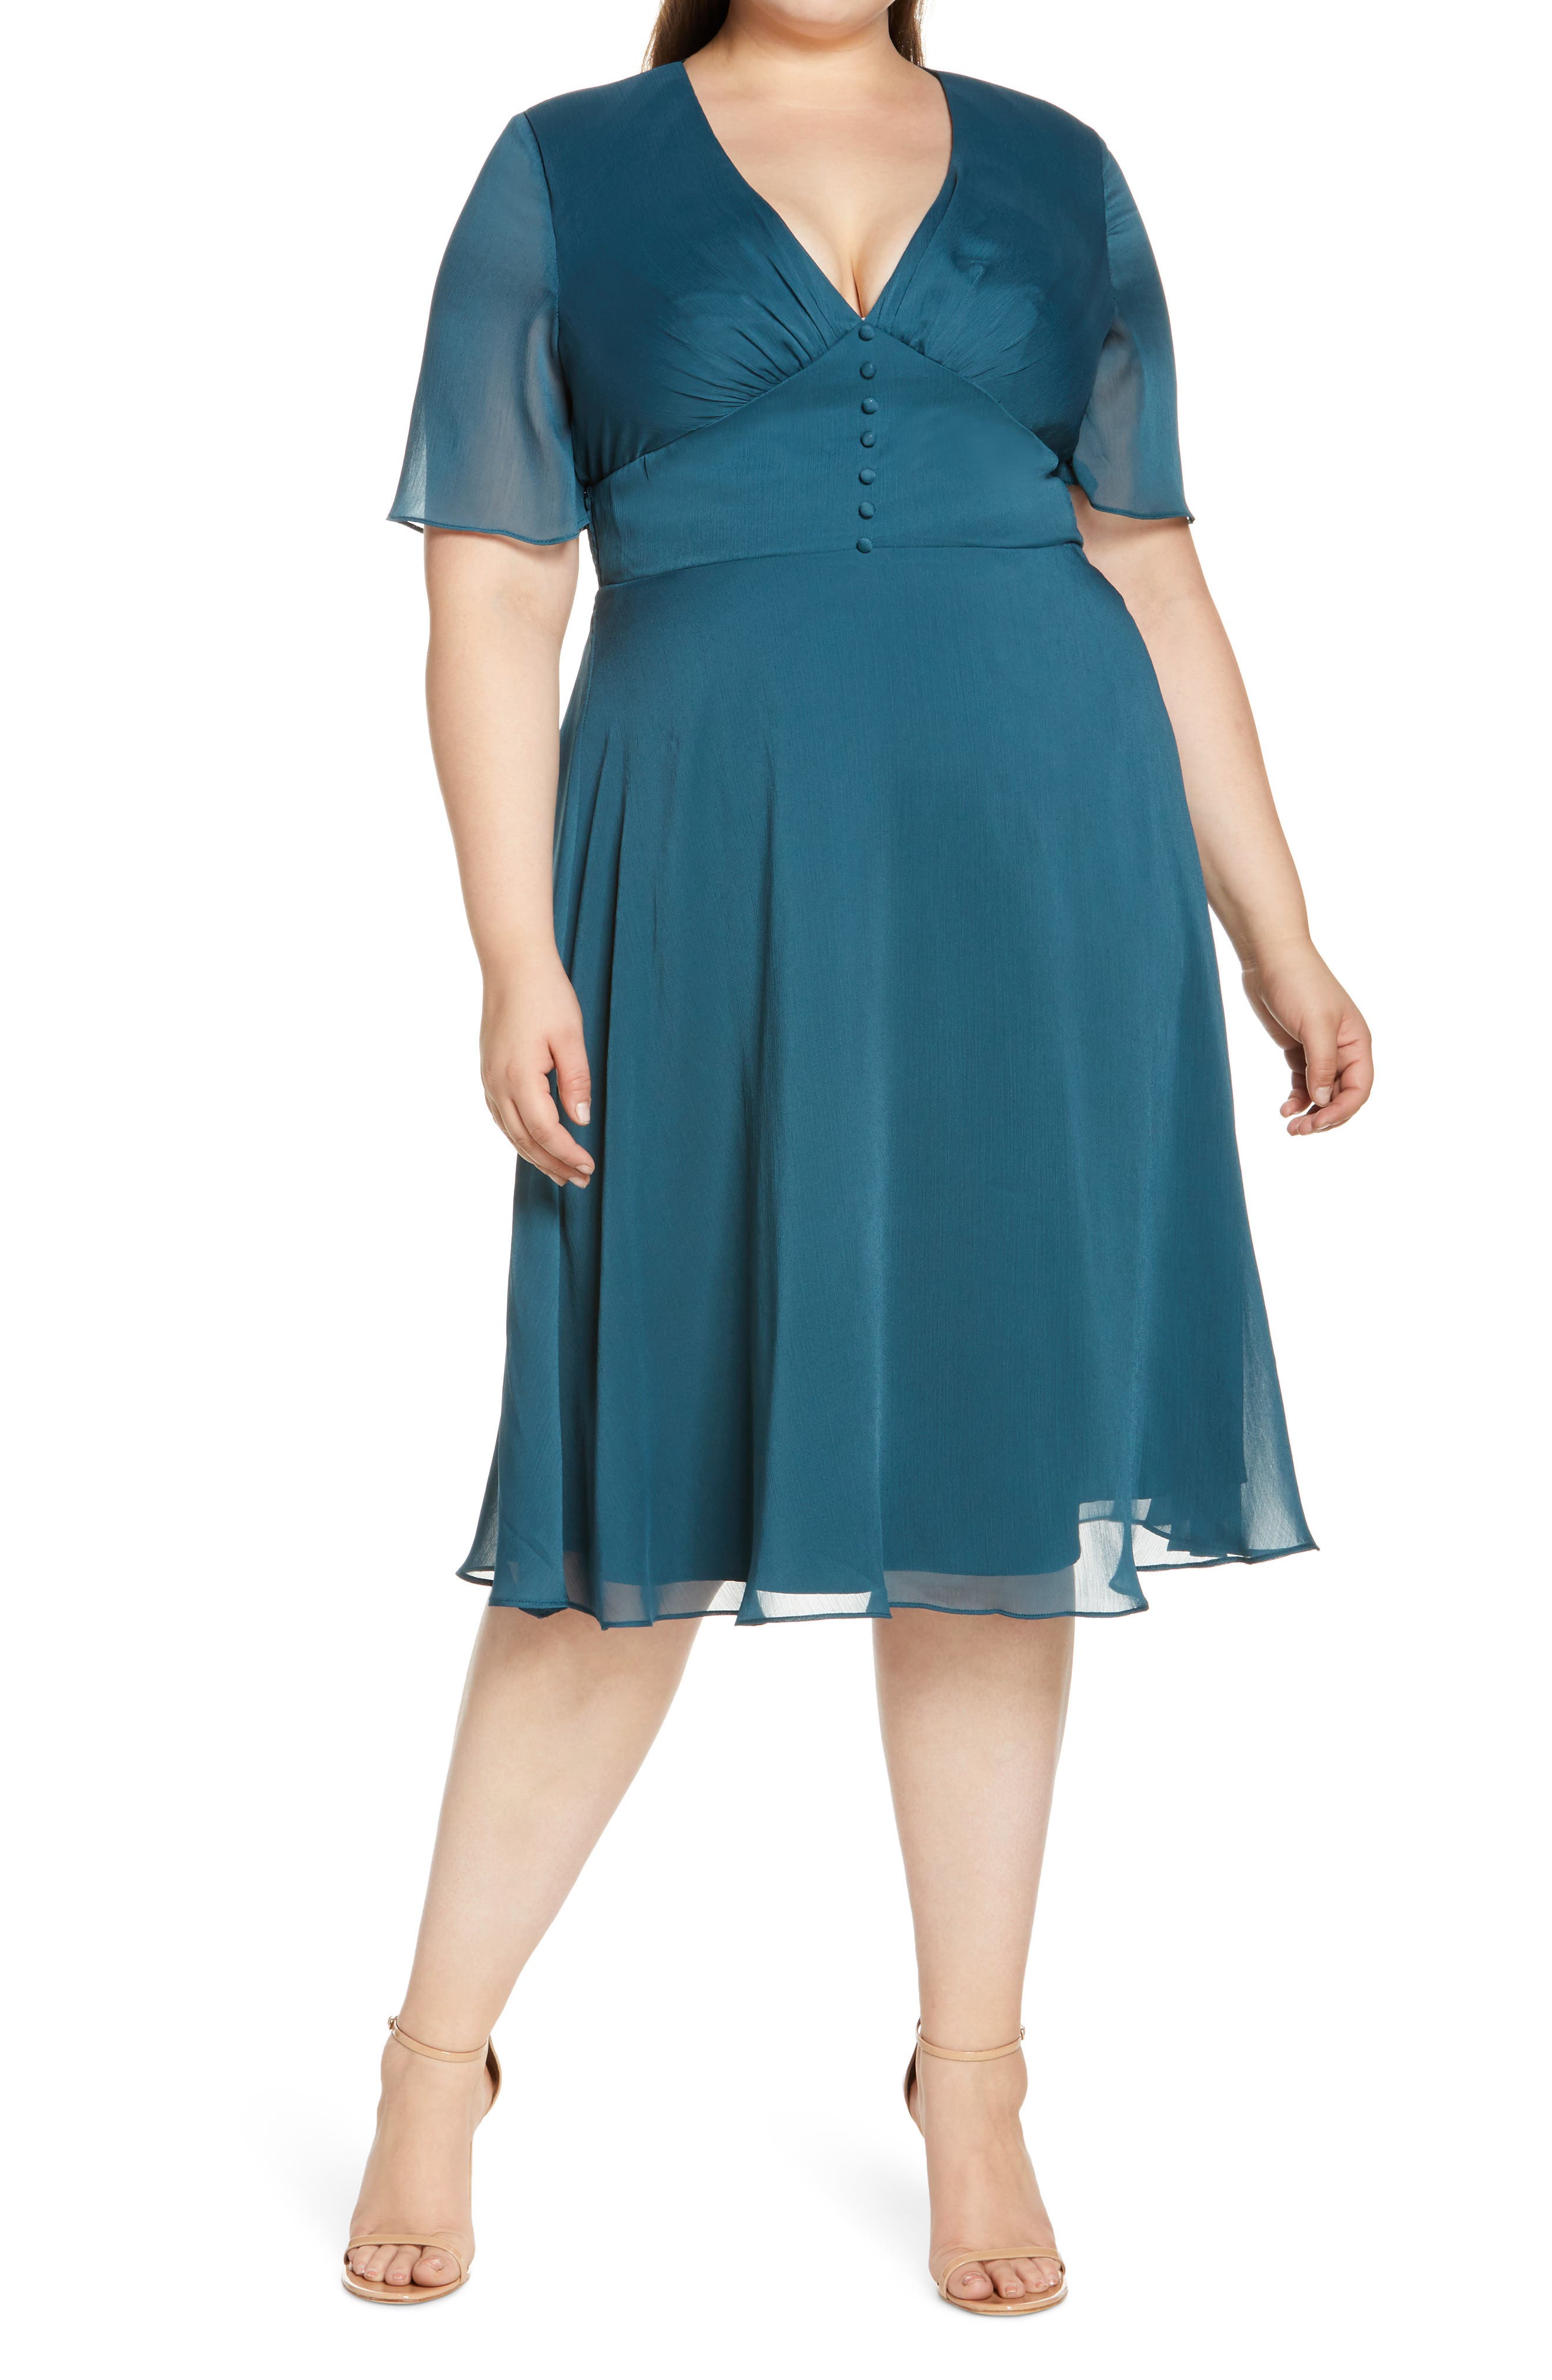 Blue/Green Plus Size Dresses for Women ...